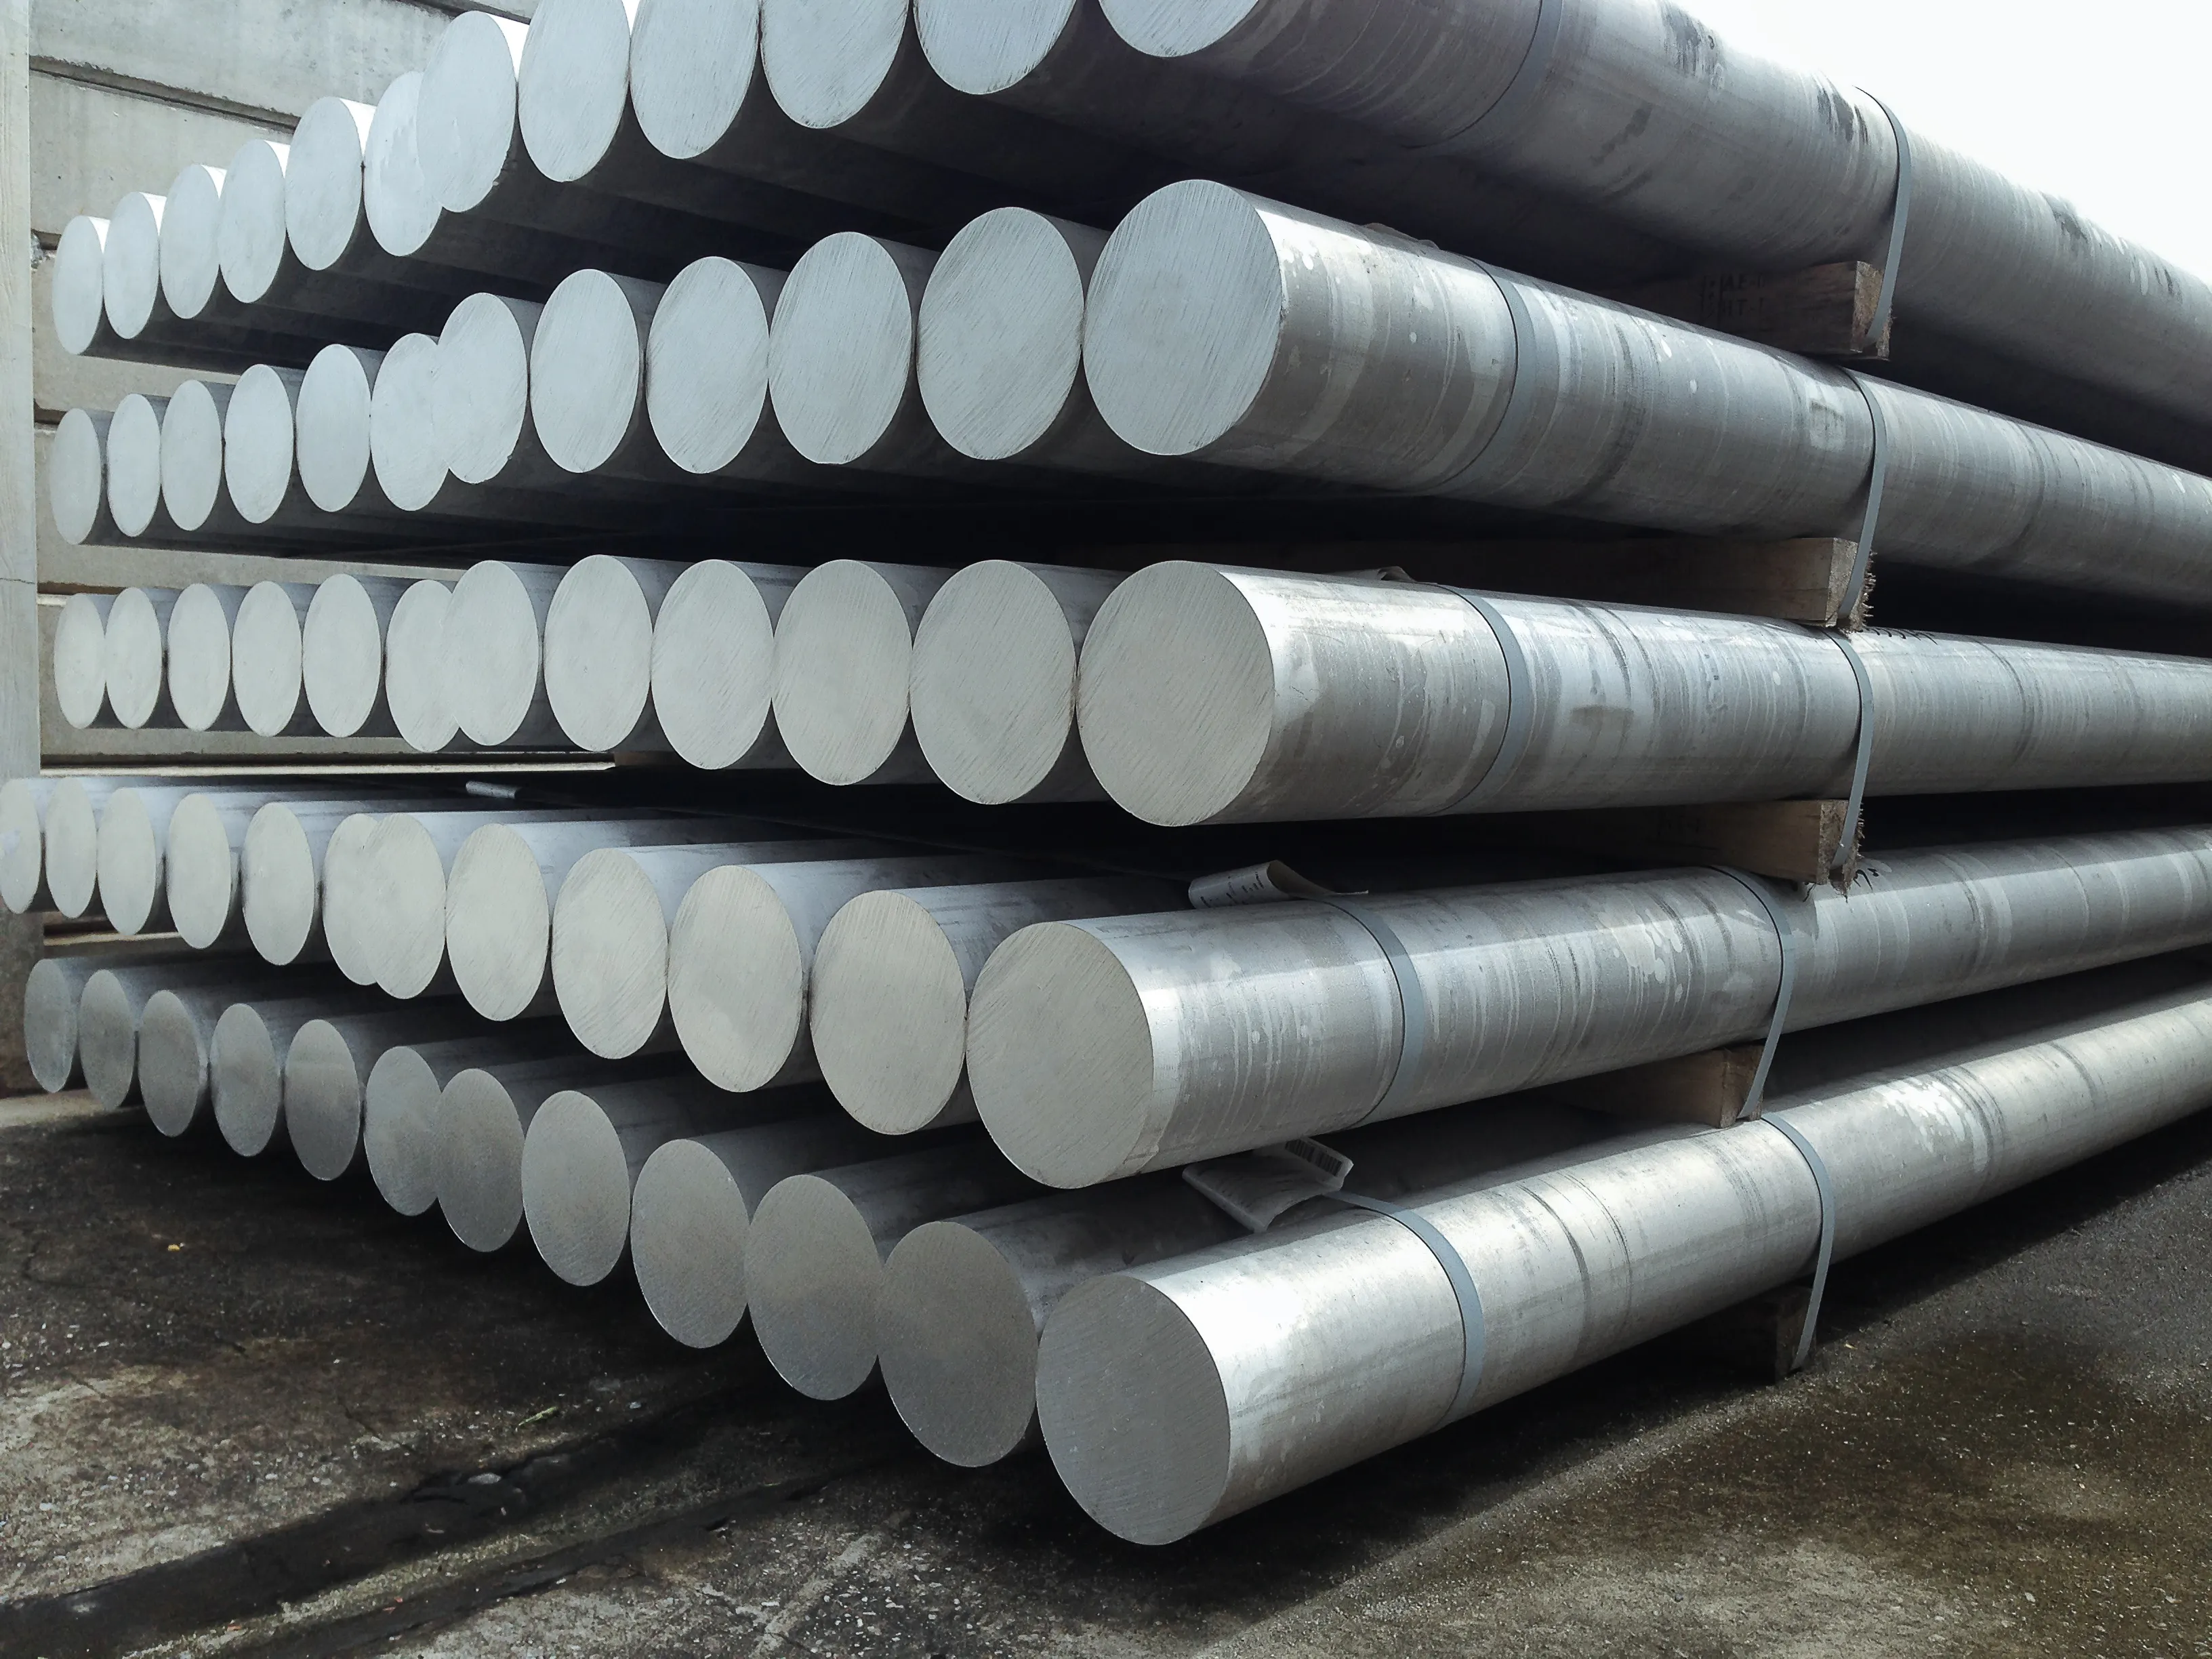 High Carbon Mold Steel Materials Sheets 1.2746 45 NiCrMoV 16-6 Scrap Tubes Fabricator Price Vanadium